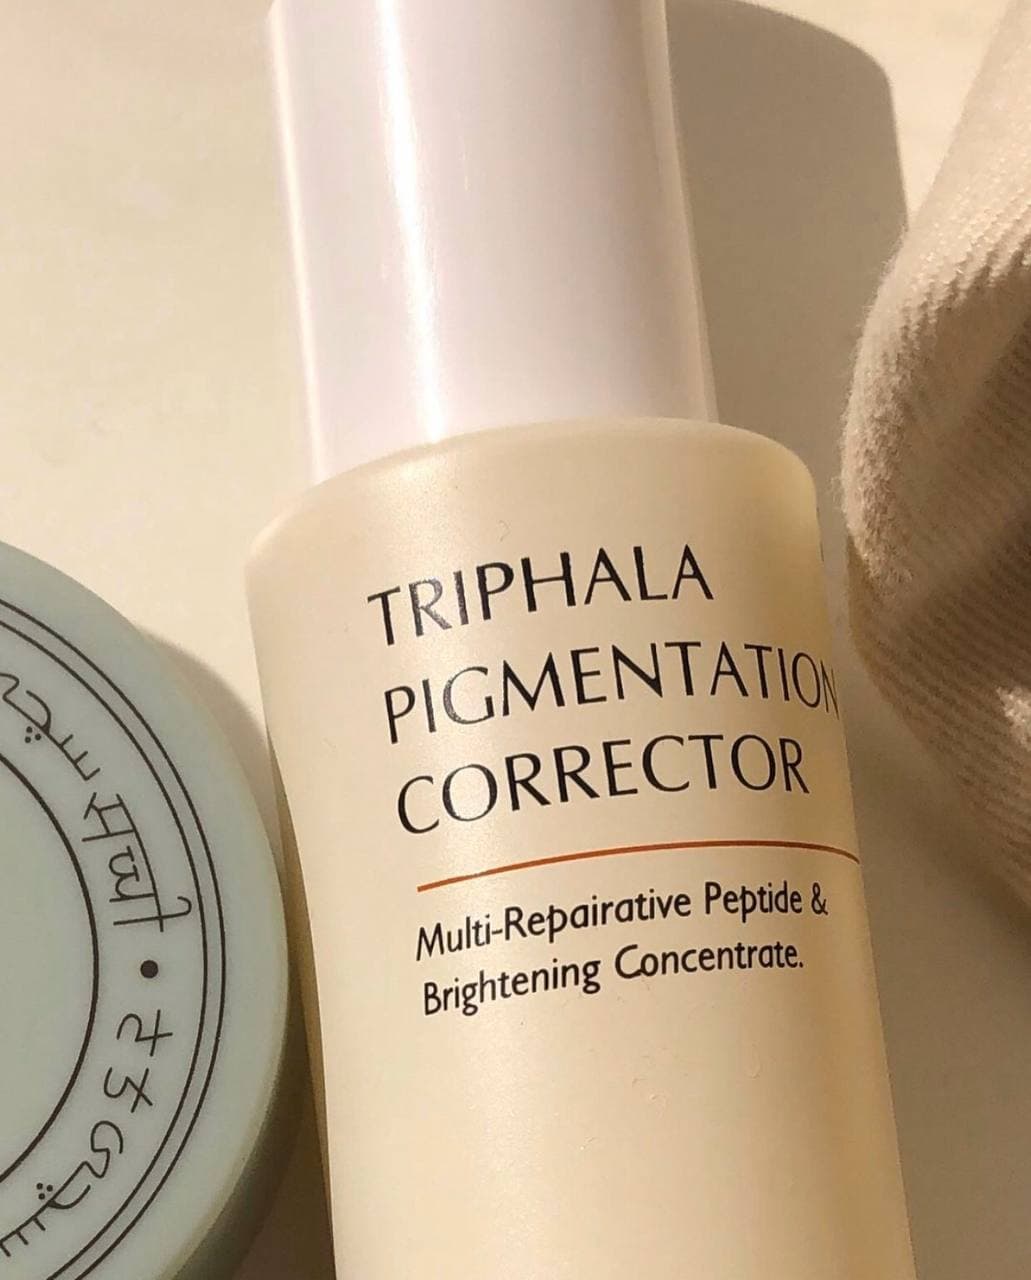 Introducing the Triphala Pigmentation Corrector